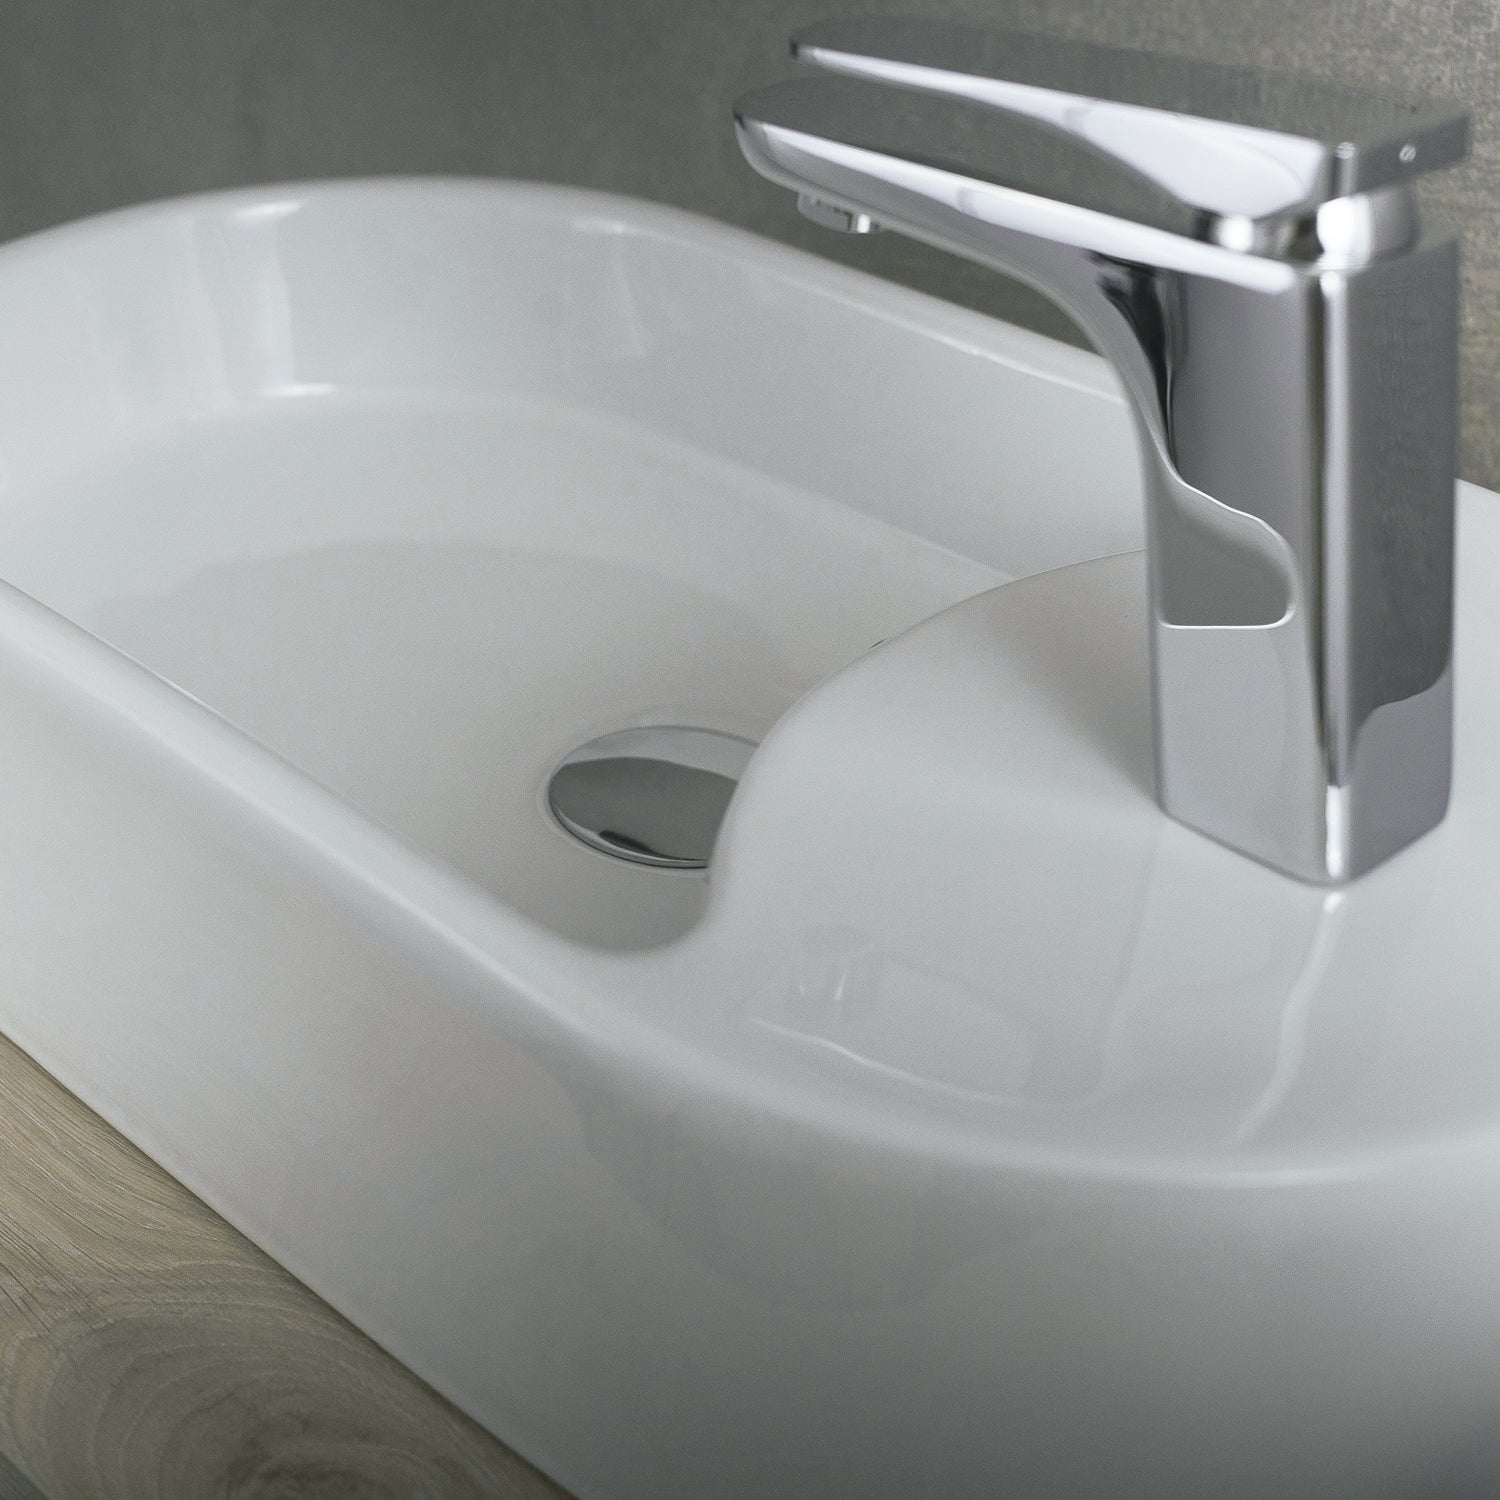 DAX Ceramic Oval Single Bowl Bathroom Vessel Sink, White Finish, 21-1/2 x 11-3/4 x 5 Inches (BSN-224)